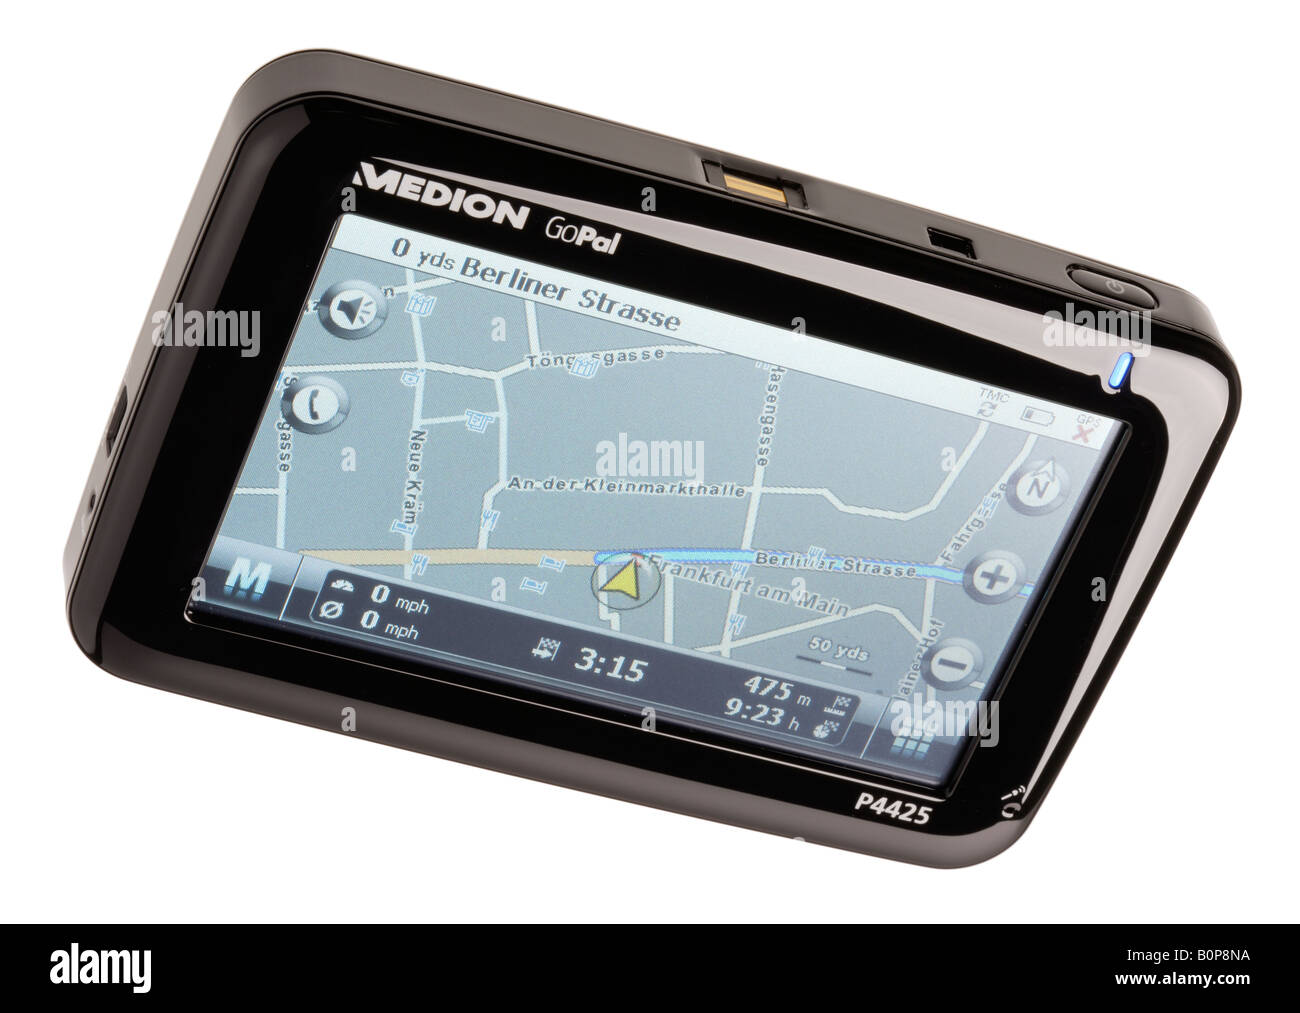 levering Zelden genie Medion Go pal satellite navigation aid Stock Photo - Alamy